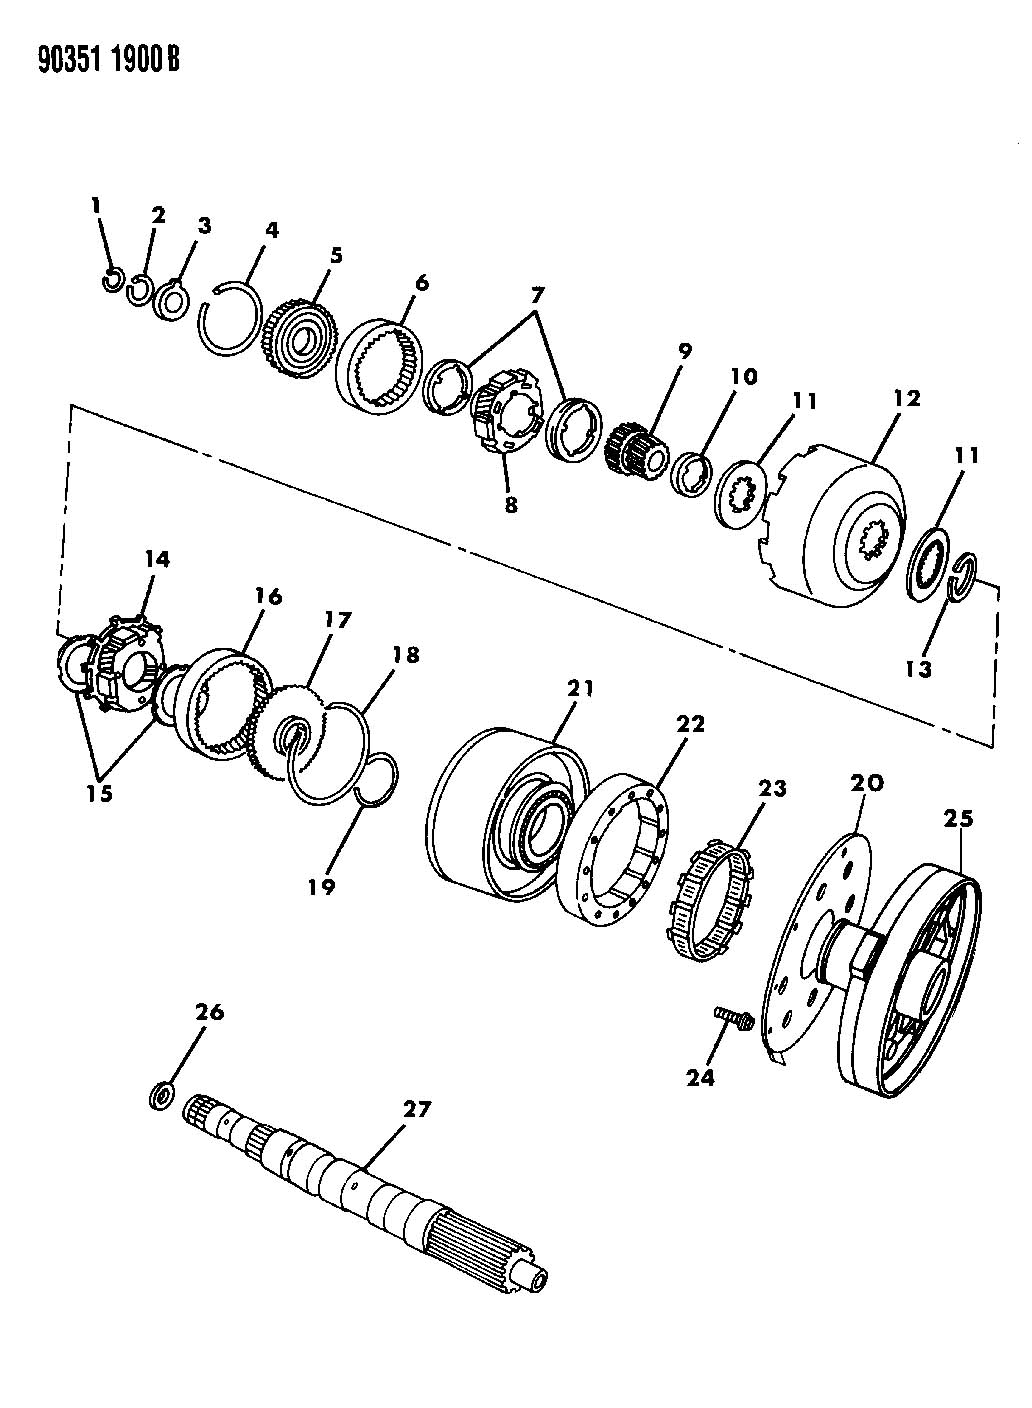 47re wiring diagram